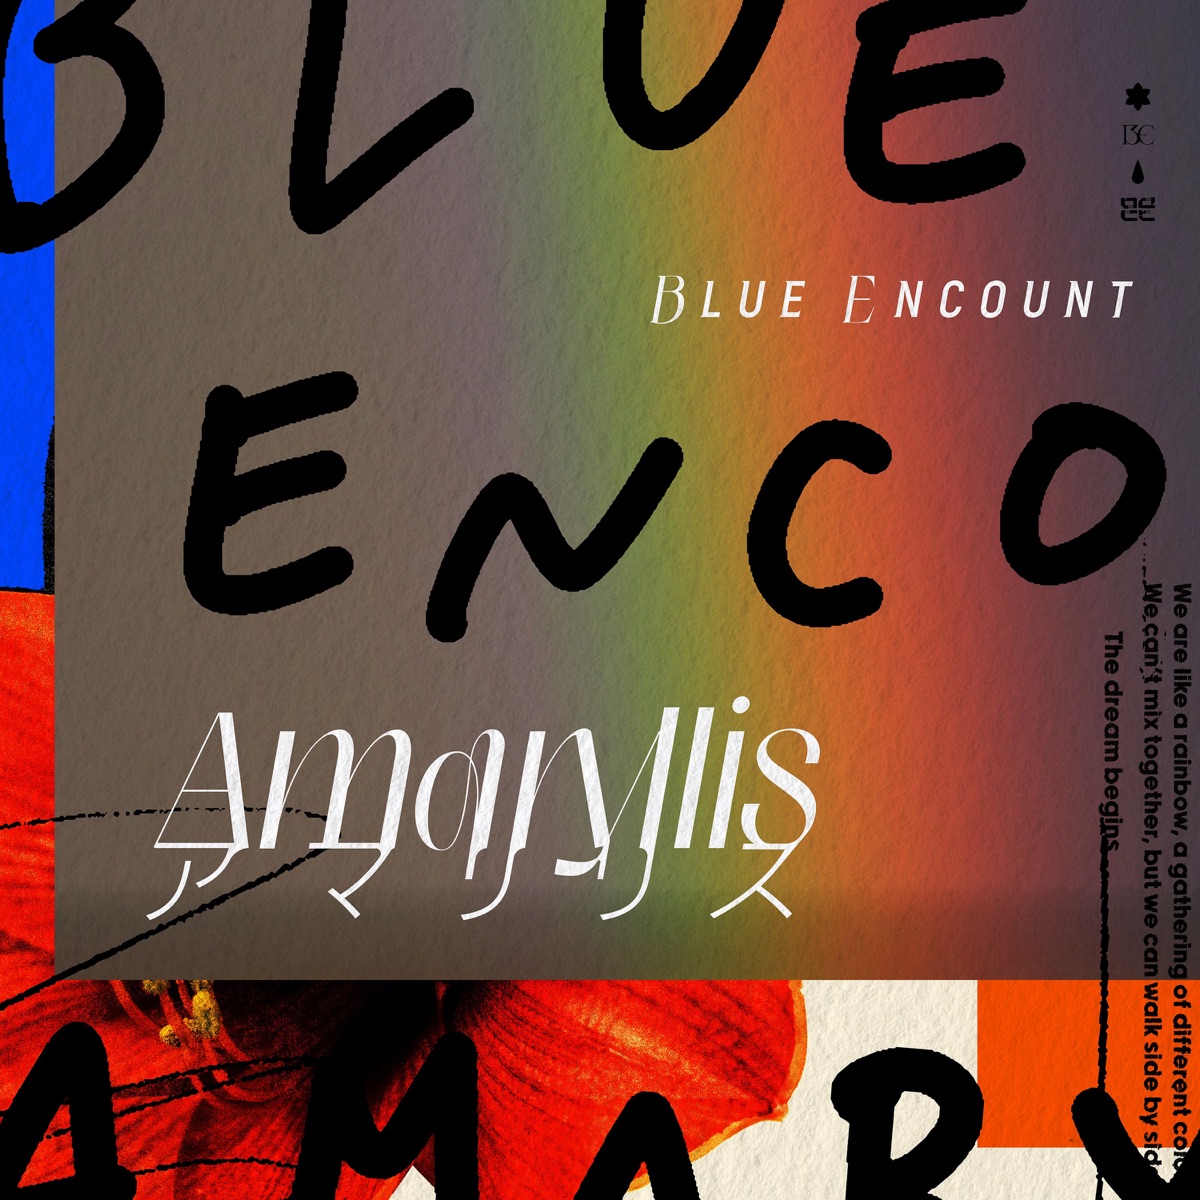 『BLUE ENCOUNT - ghosted』収録の『アマリリス』ジャケット